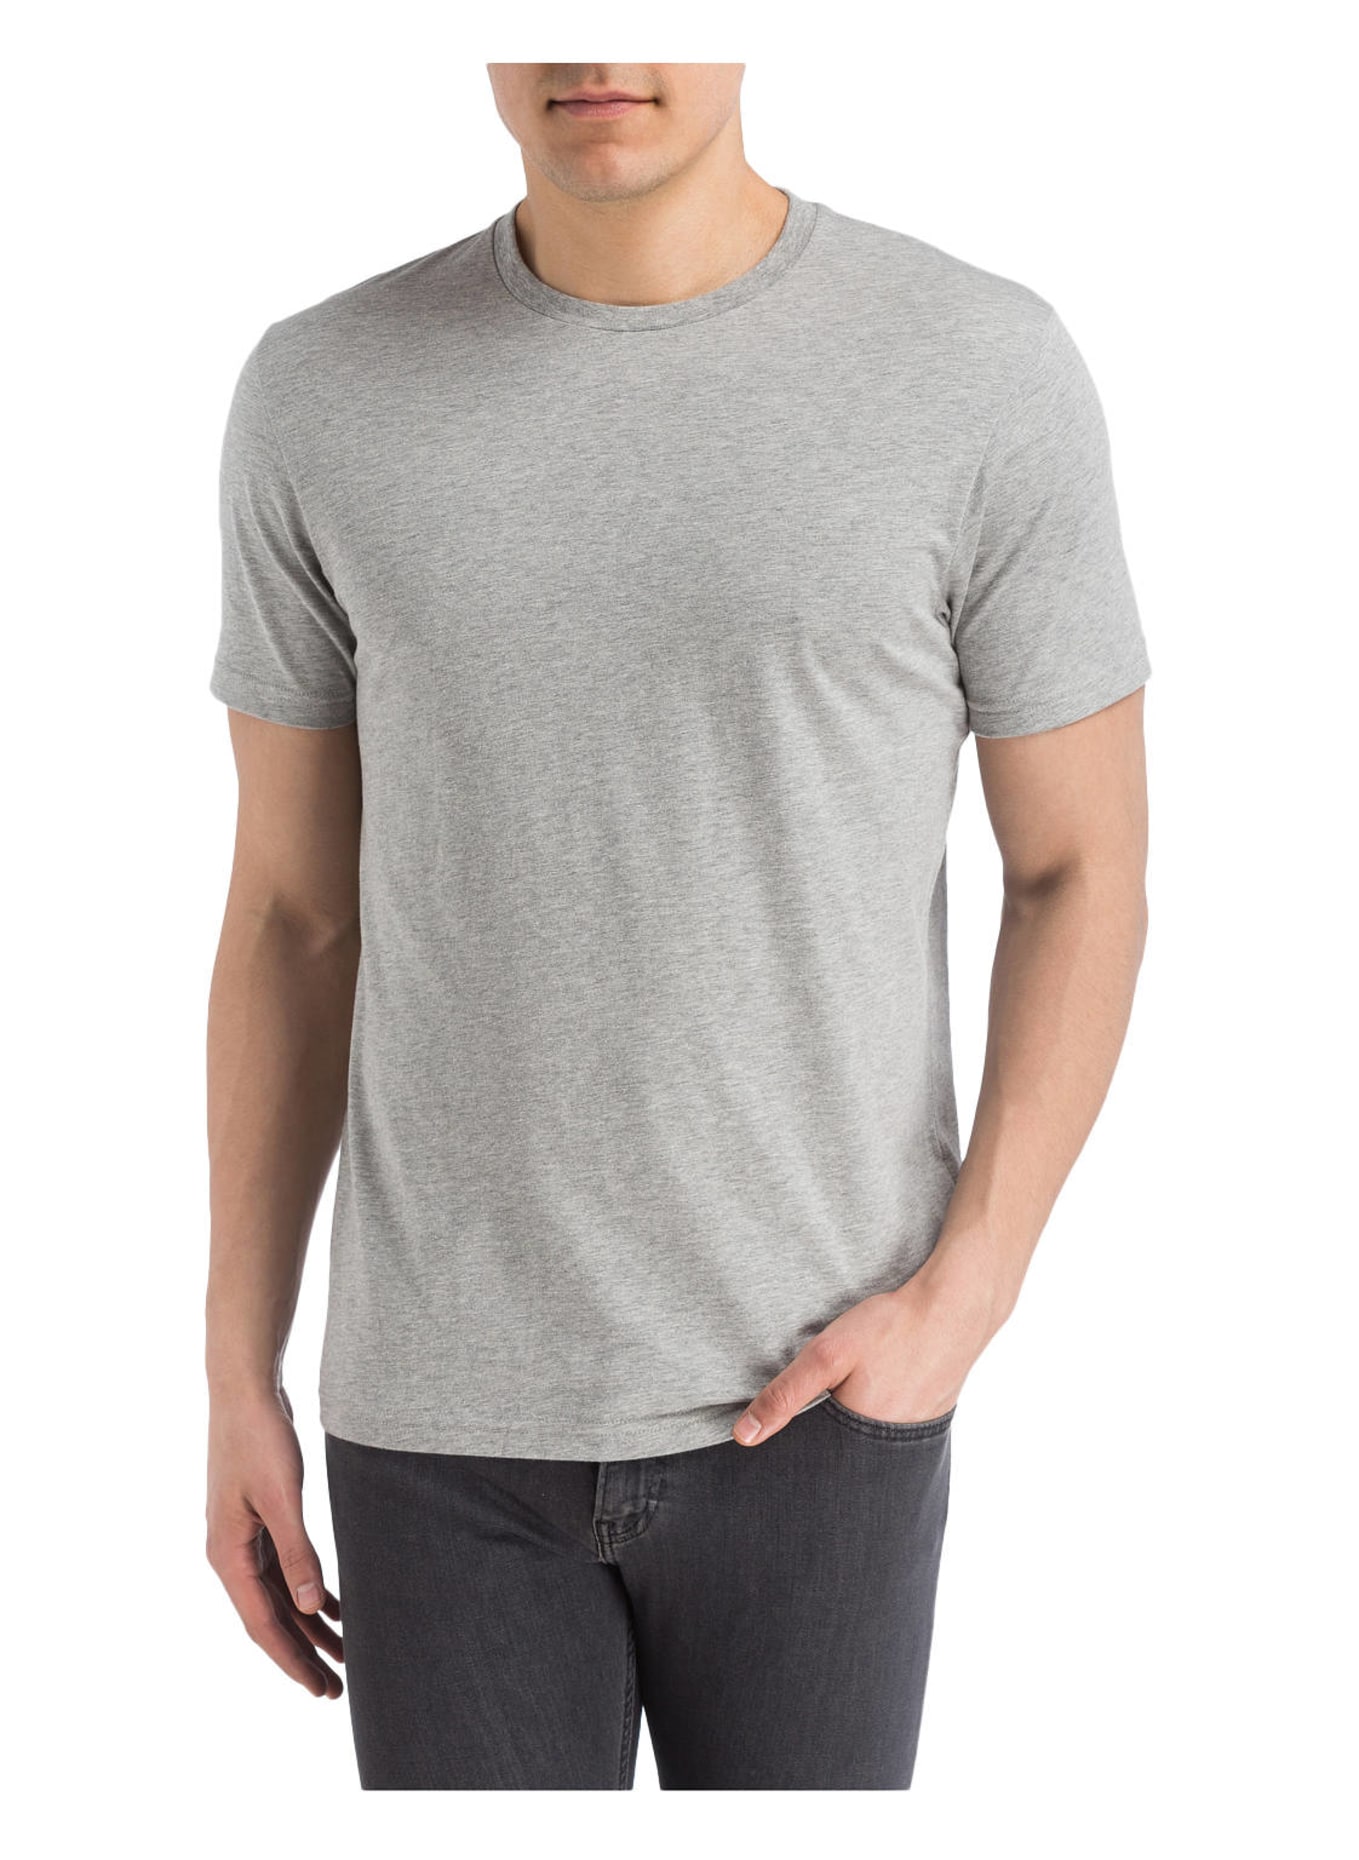 RAGMAN T-shirt regular fit in gray mélange